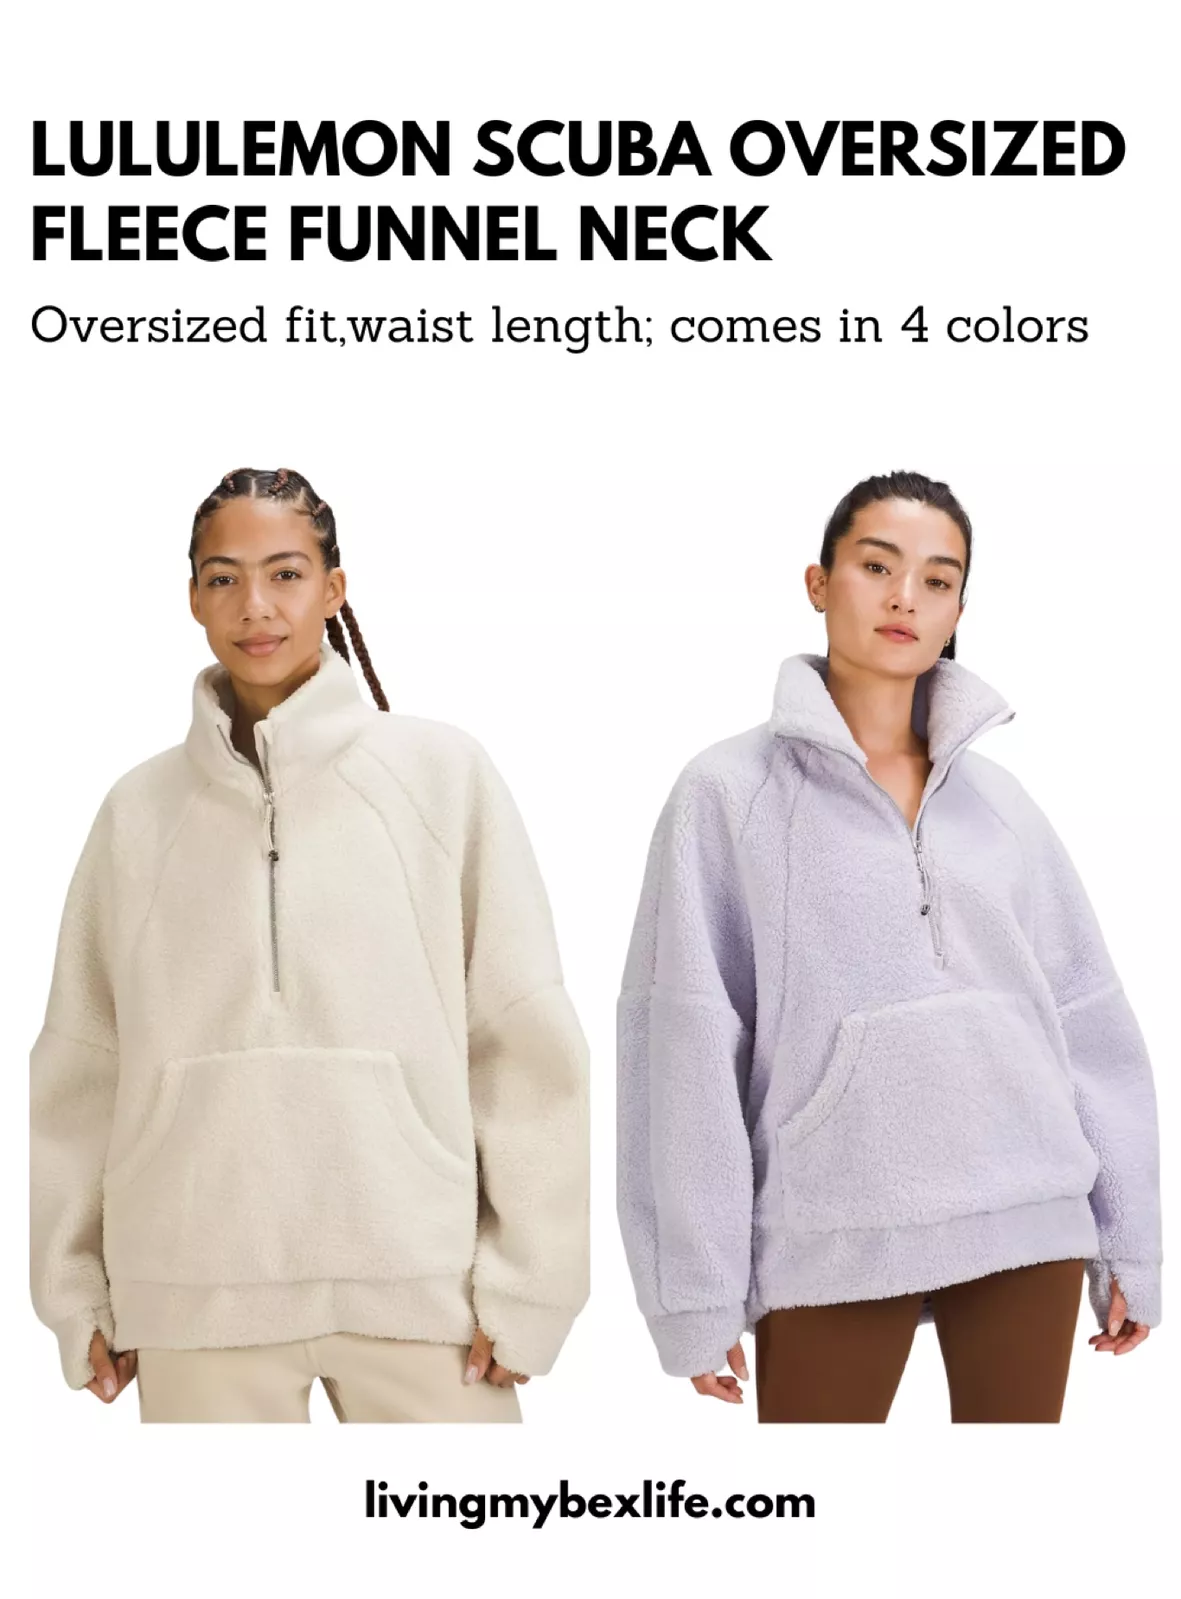 Scuba Oversized Fleece Funnel Neck